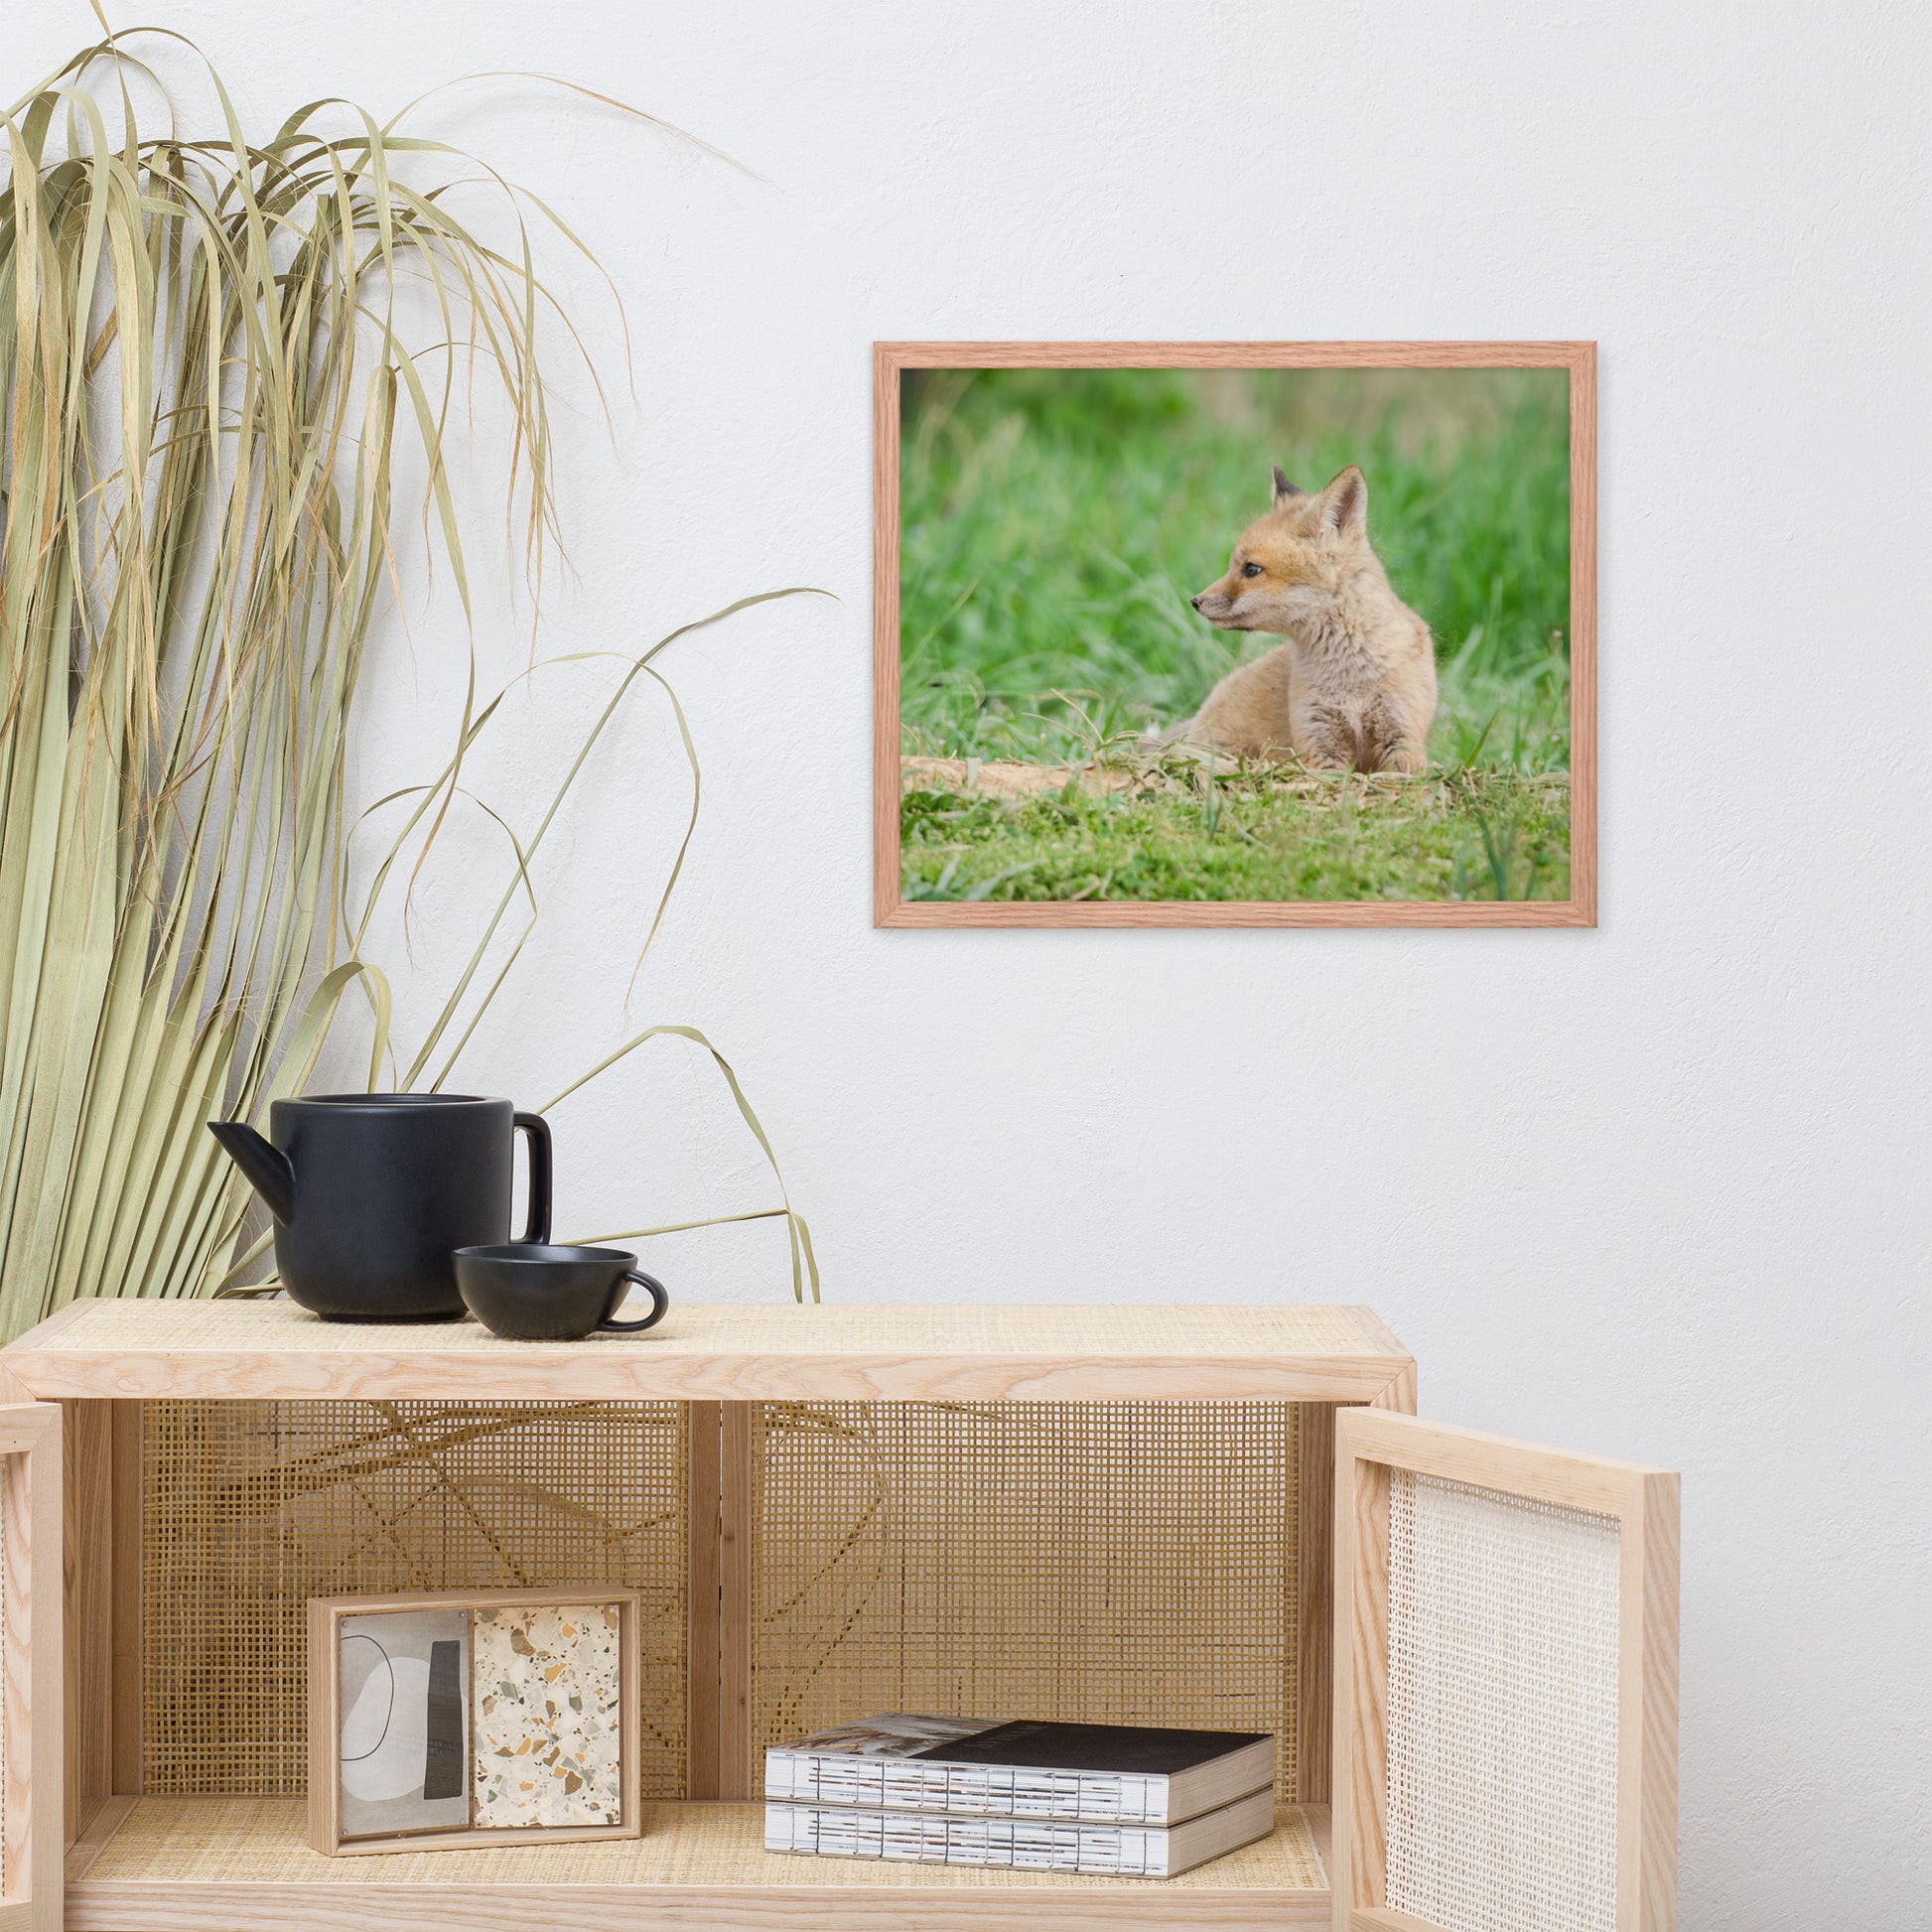 Best Artwork For Bedroom: Red Fox Pups - Chilling/ Animal / Wildlife / Nature Photographic Artwork - Framed Artwork - Wall Decor